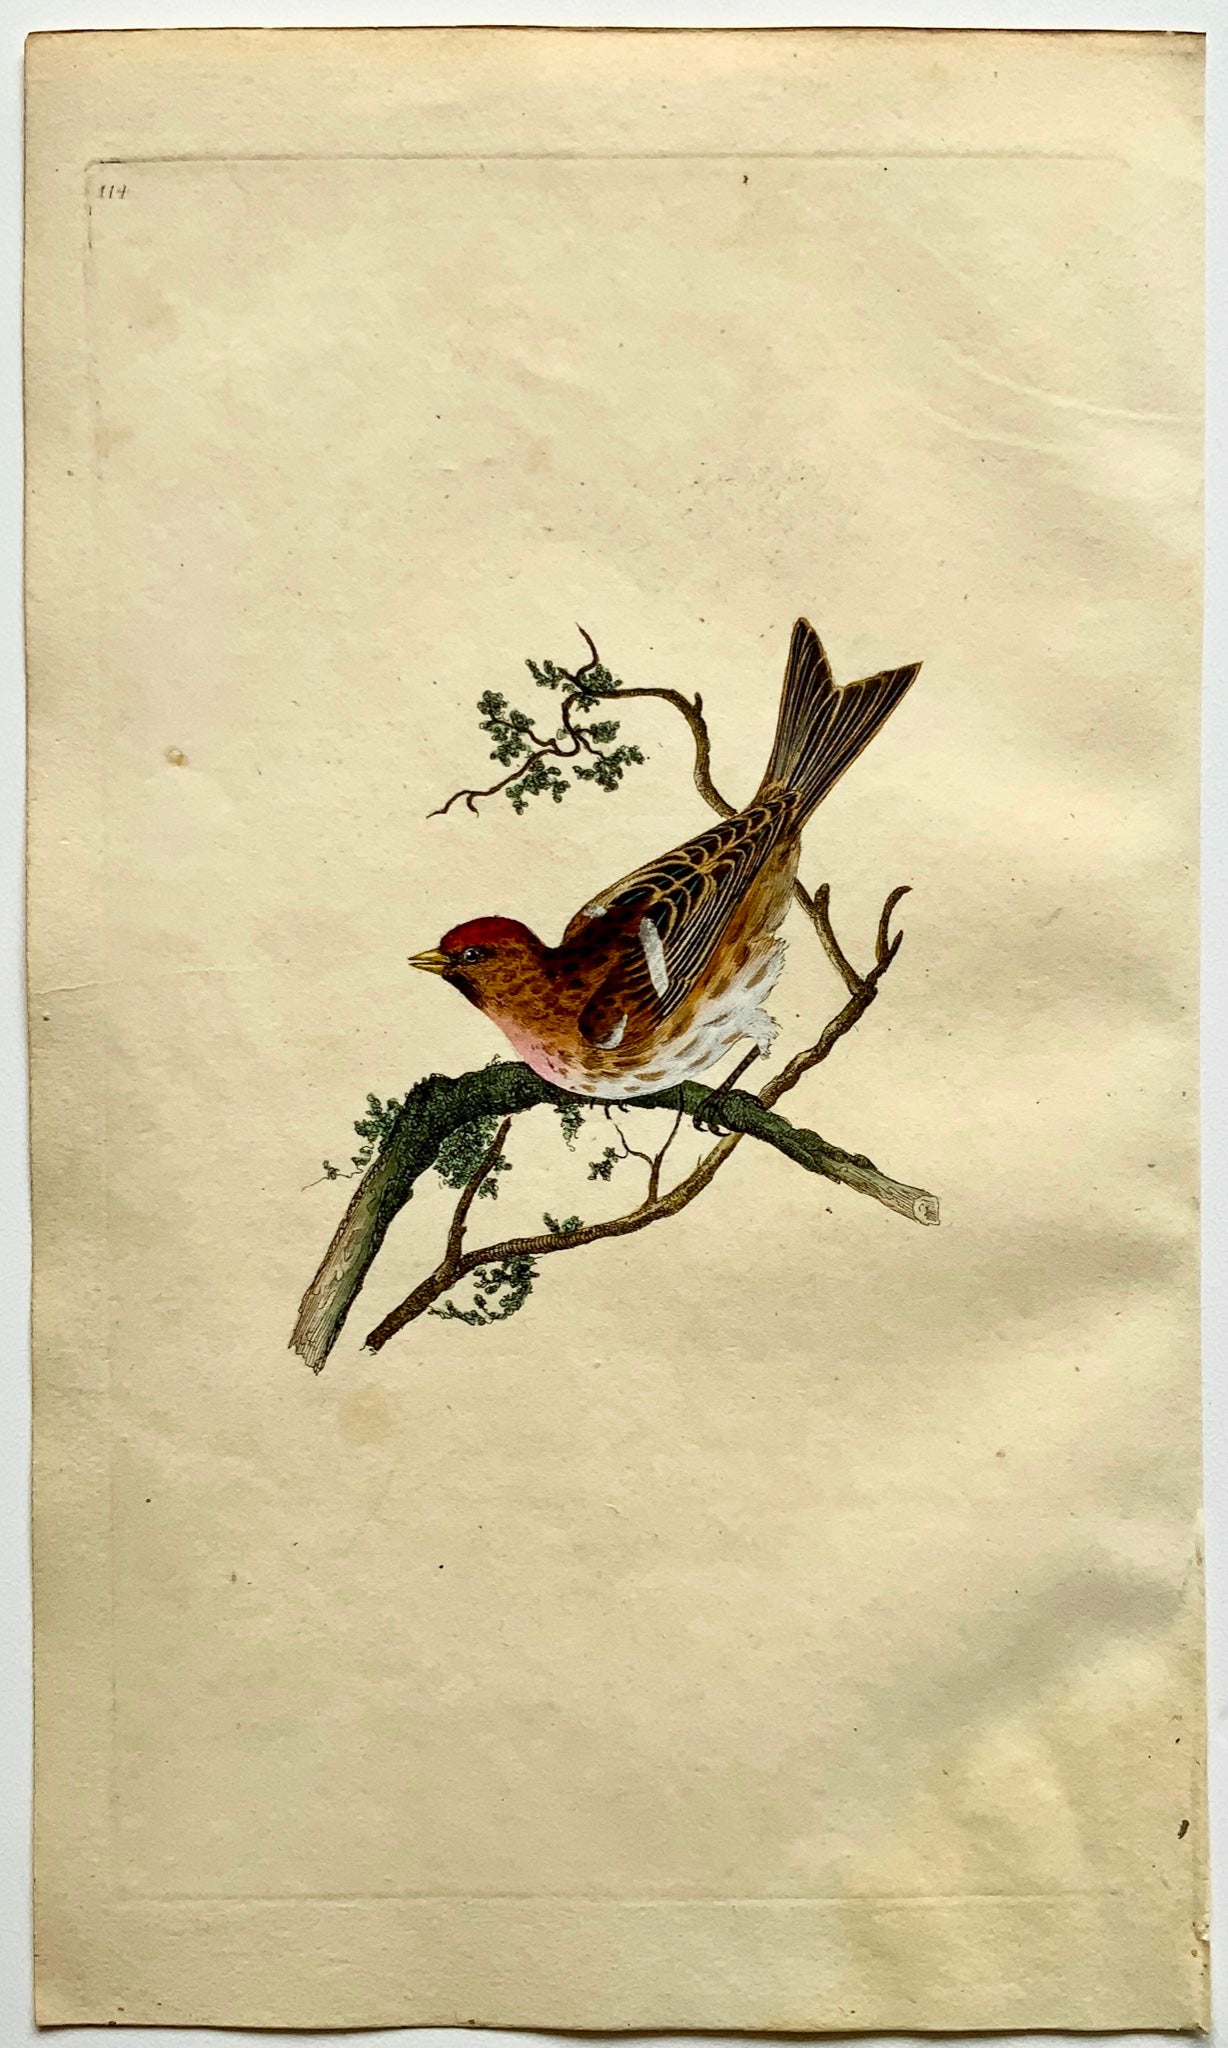 1794 Edward Donovan - LESSER LINNET Ornithology - exquisite hand coloured copper engraving